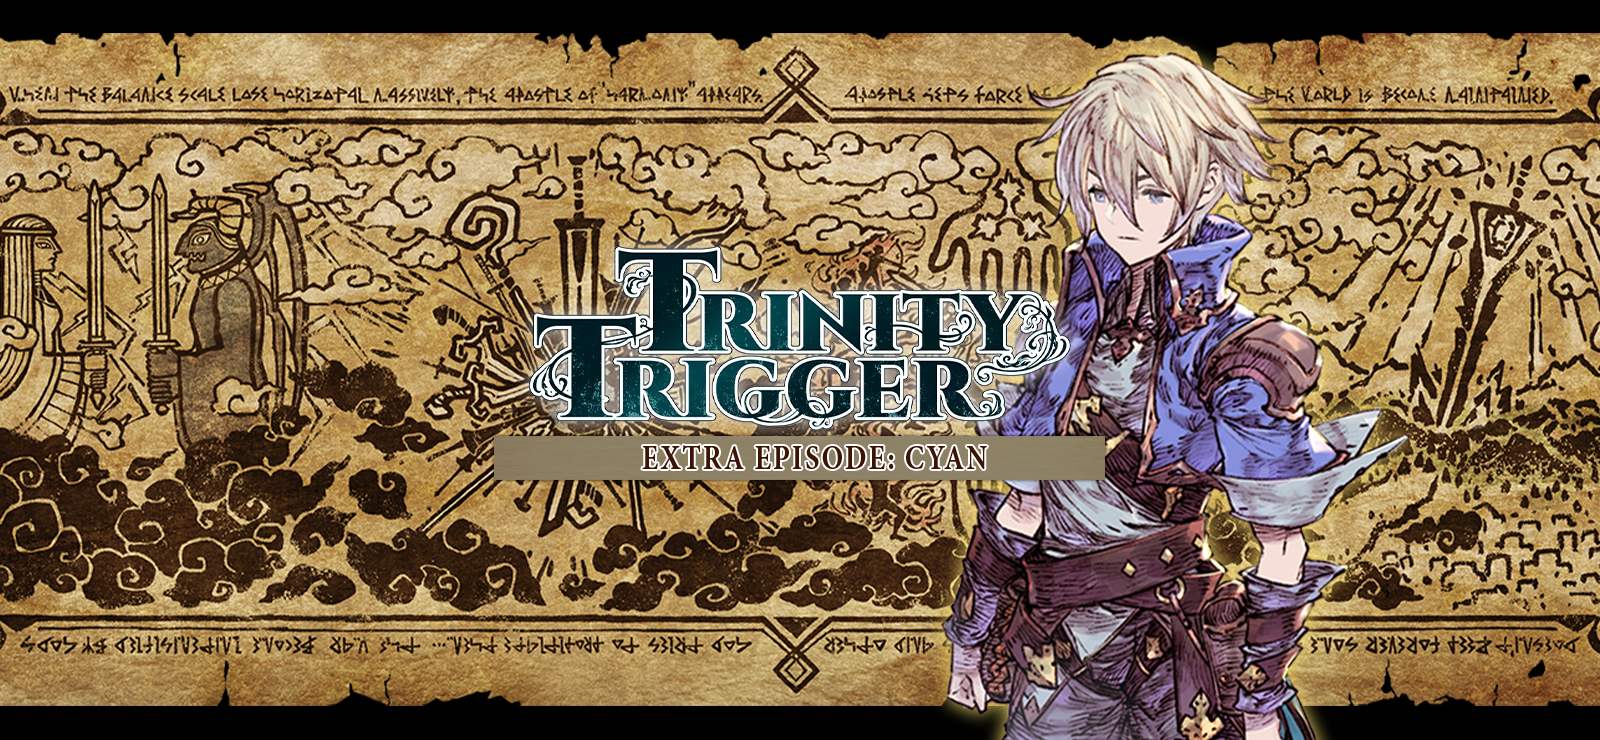 Trinity Trigger - Extra Episode: Cyan